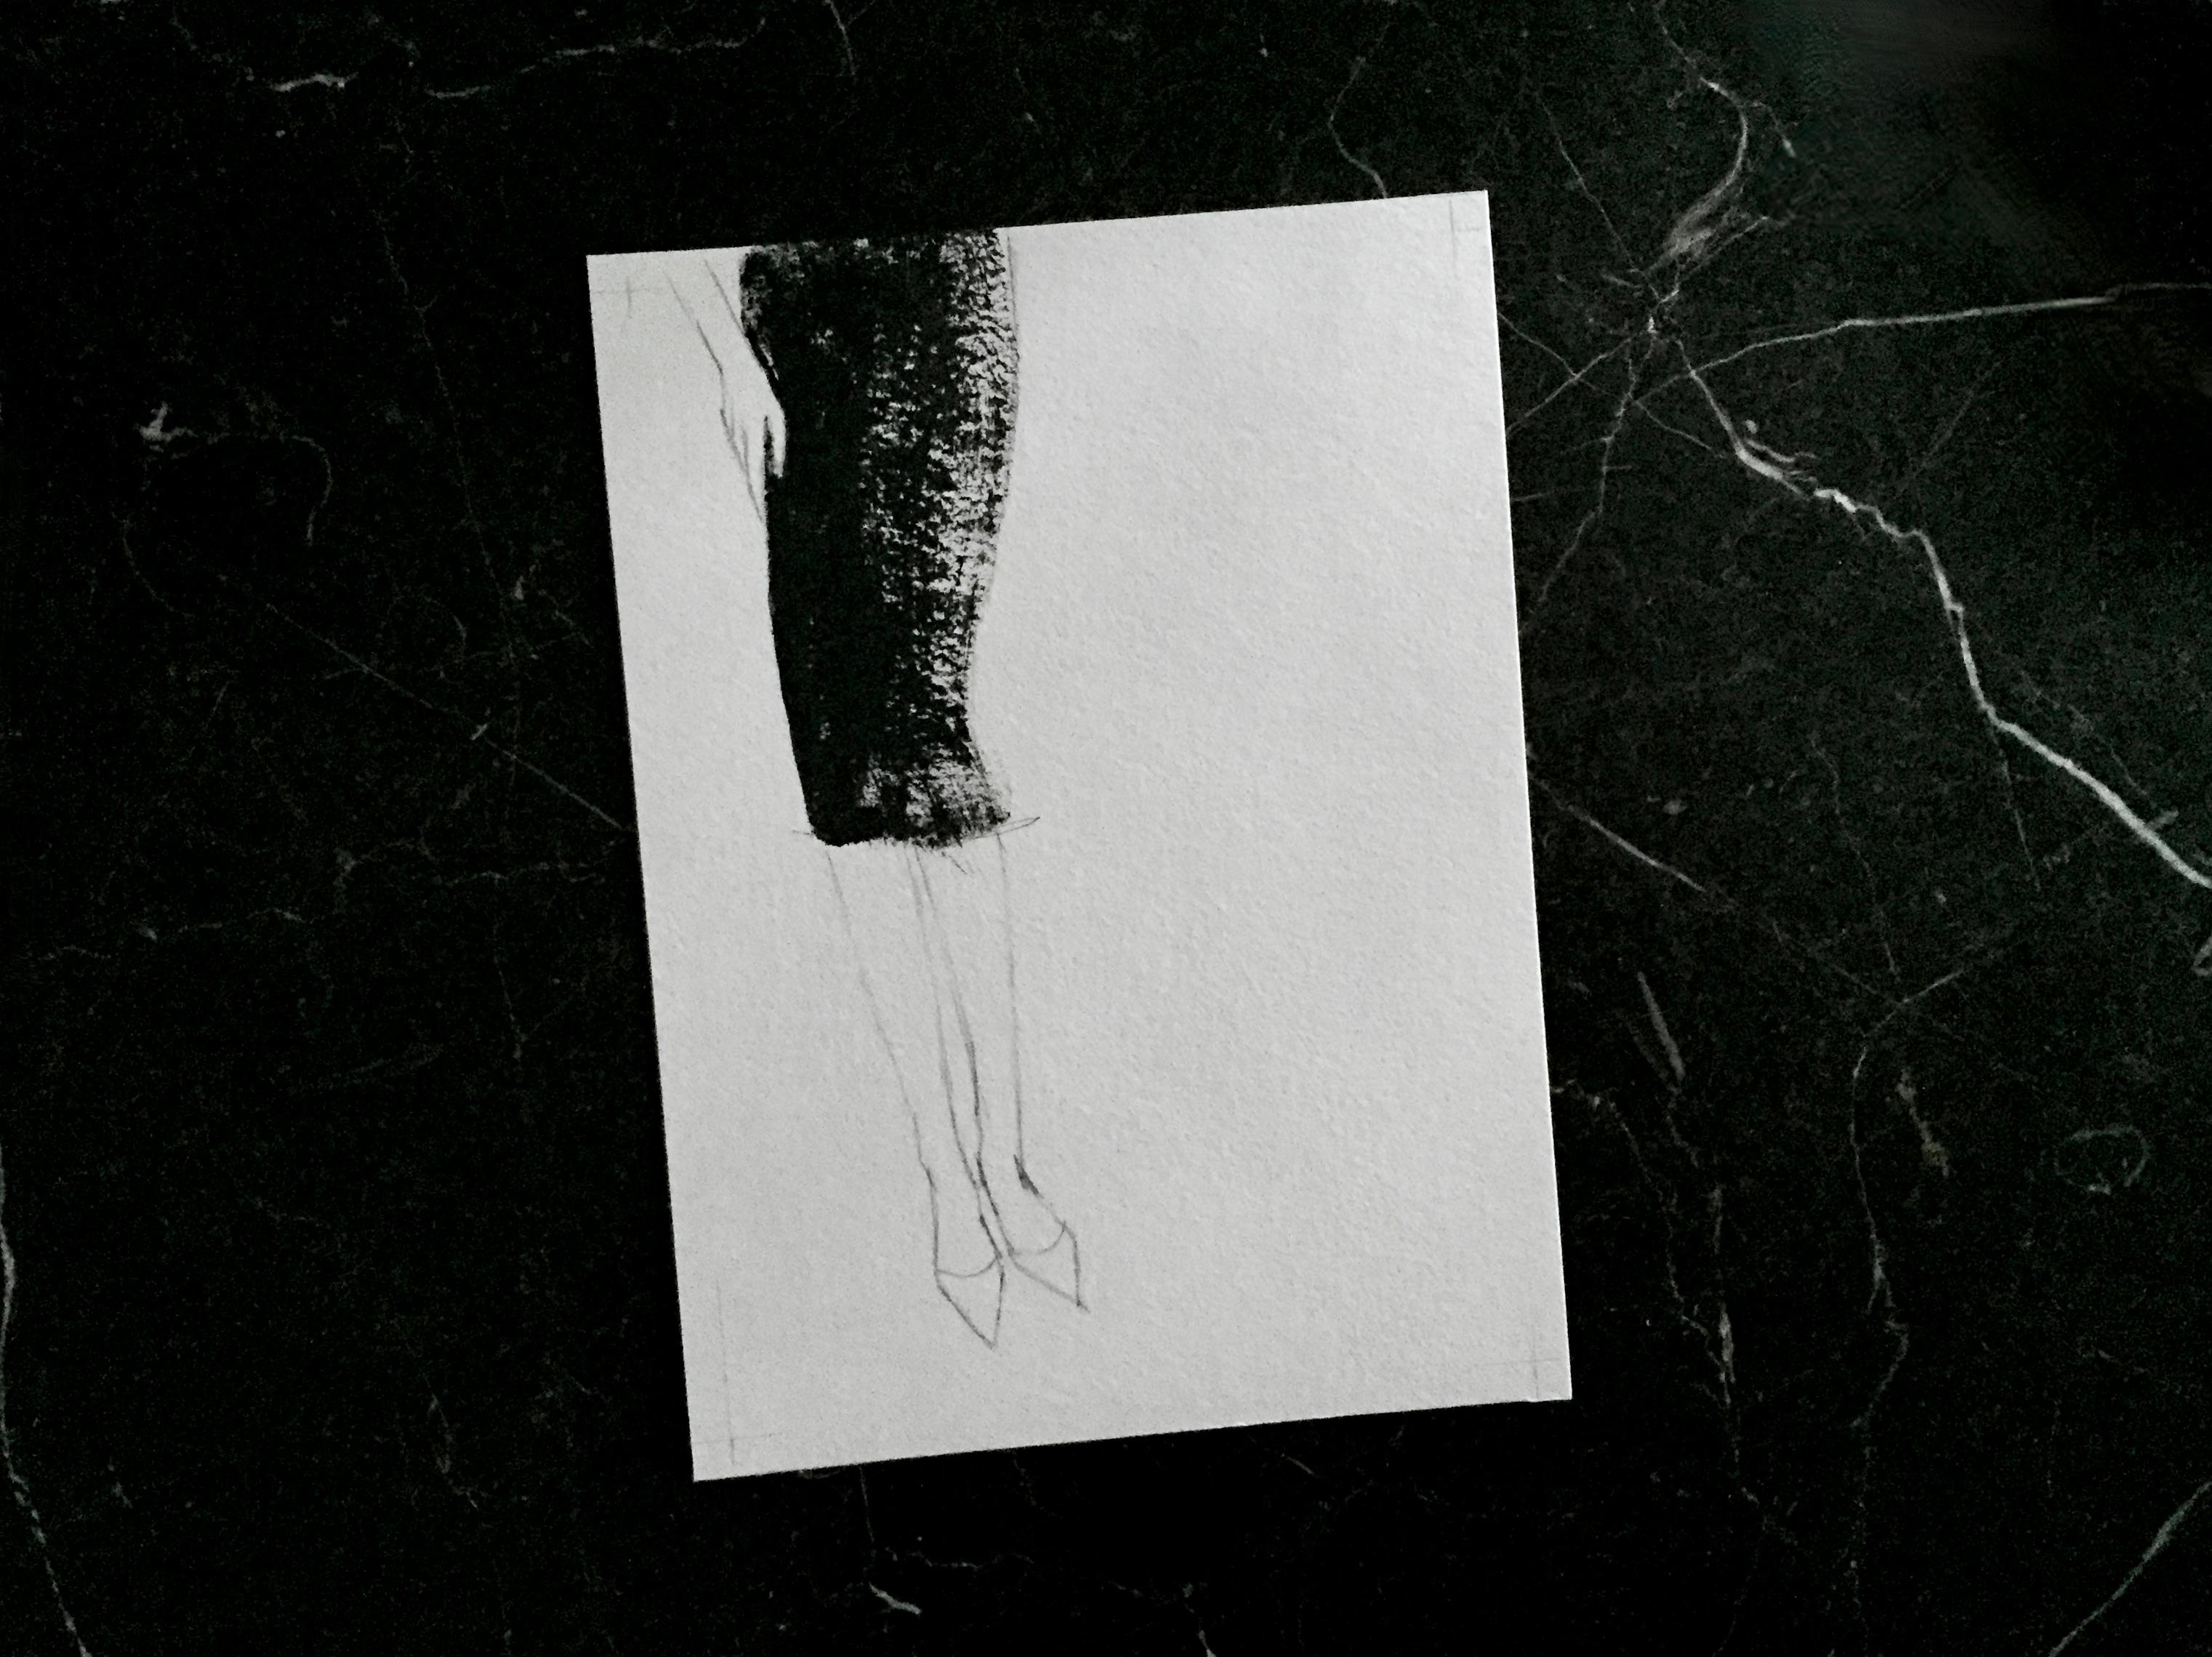 Andrea Stajan-Ferkul Figurative Art - Pencil Skirt - 5" x 7", Black & White, Original Artwork On Paper